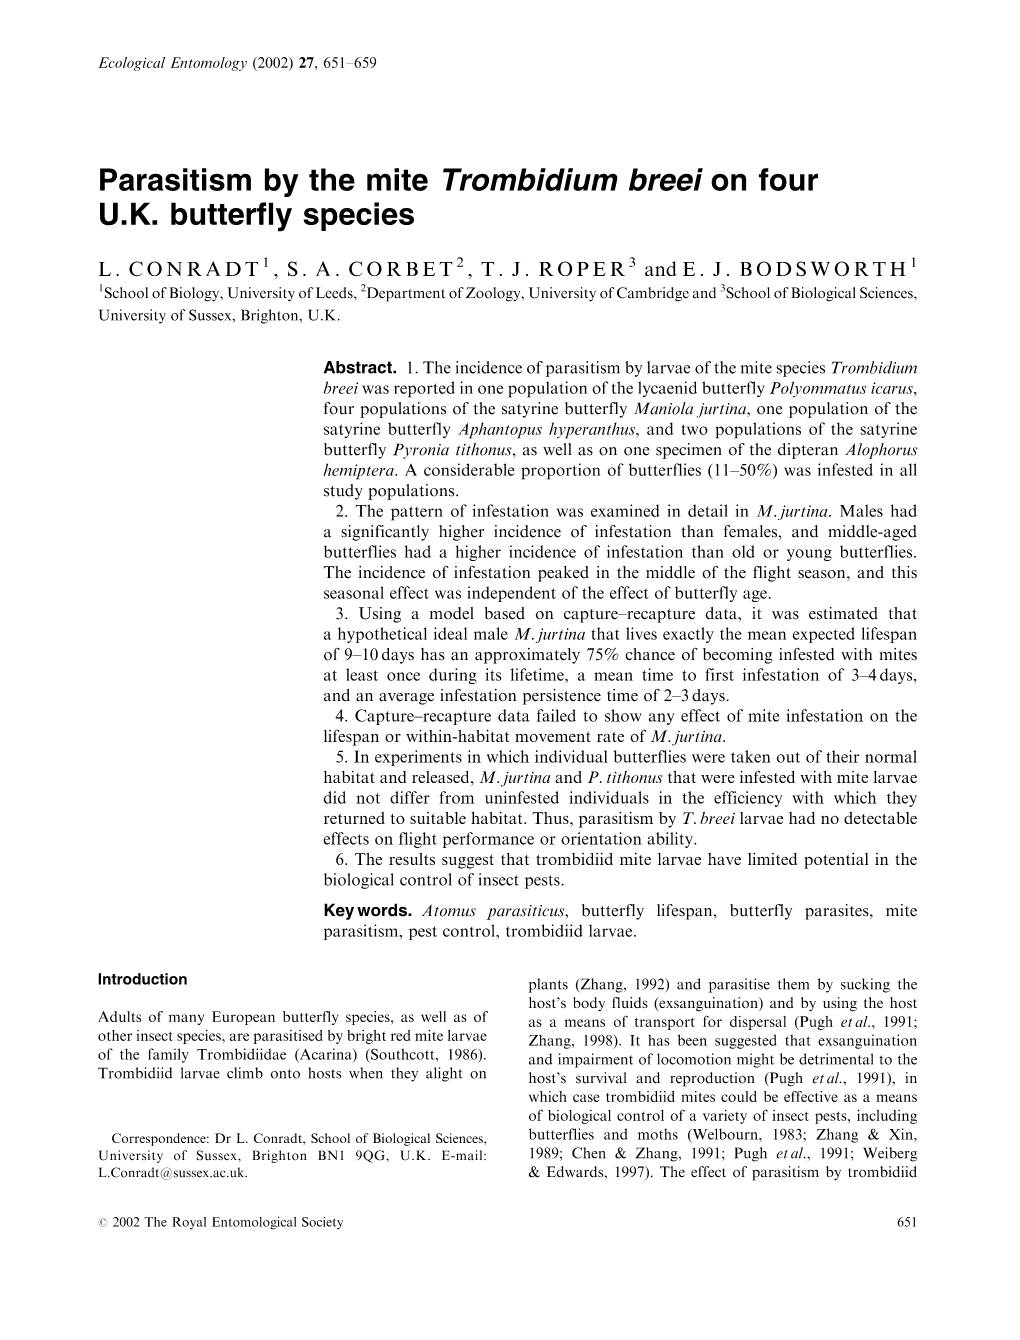 Parasitism by the Mite Trombidium Breei on Four U.K. Butterfly Species